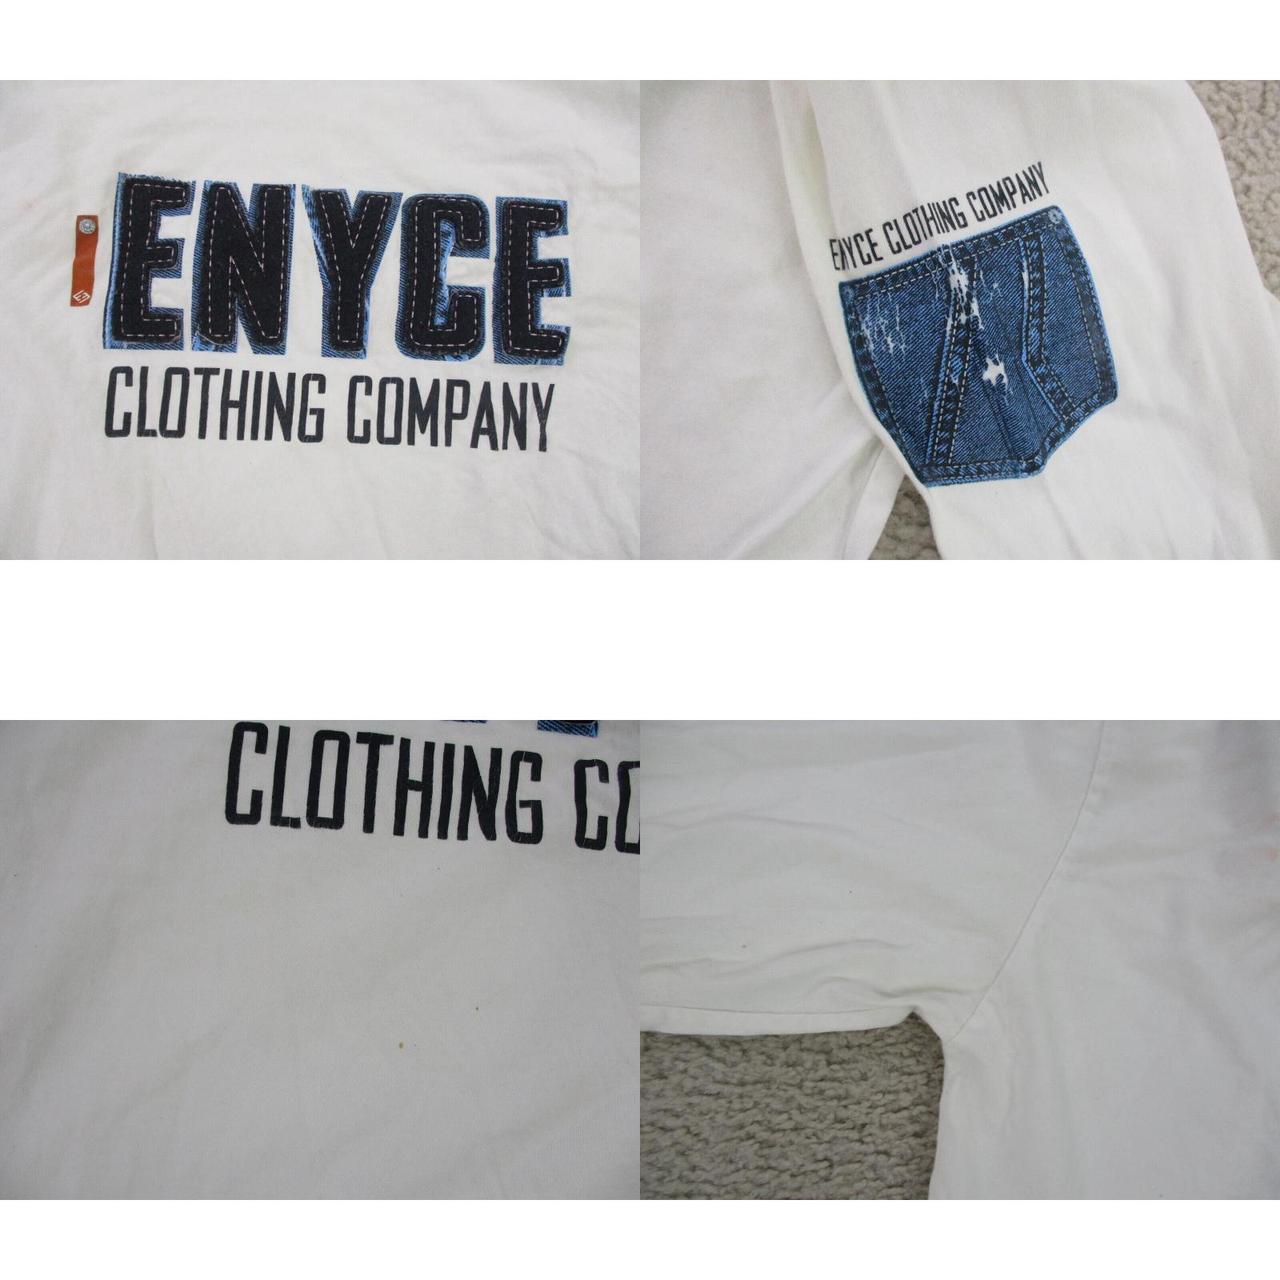 enyce white shirt